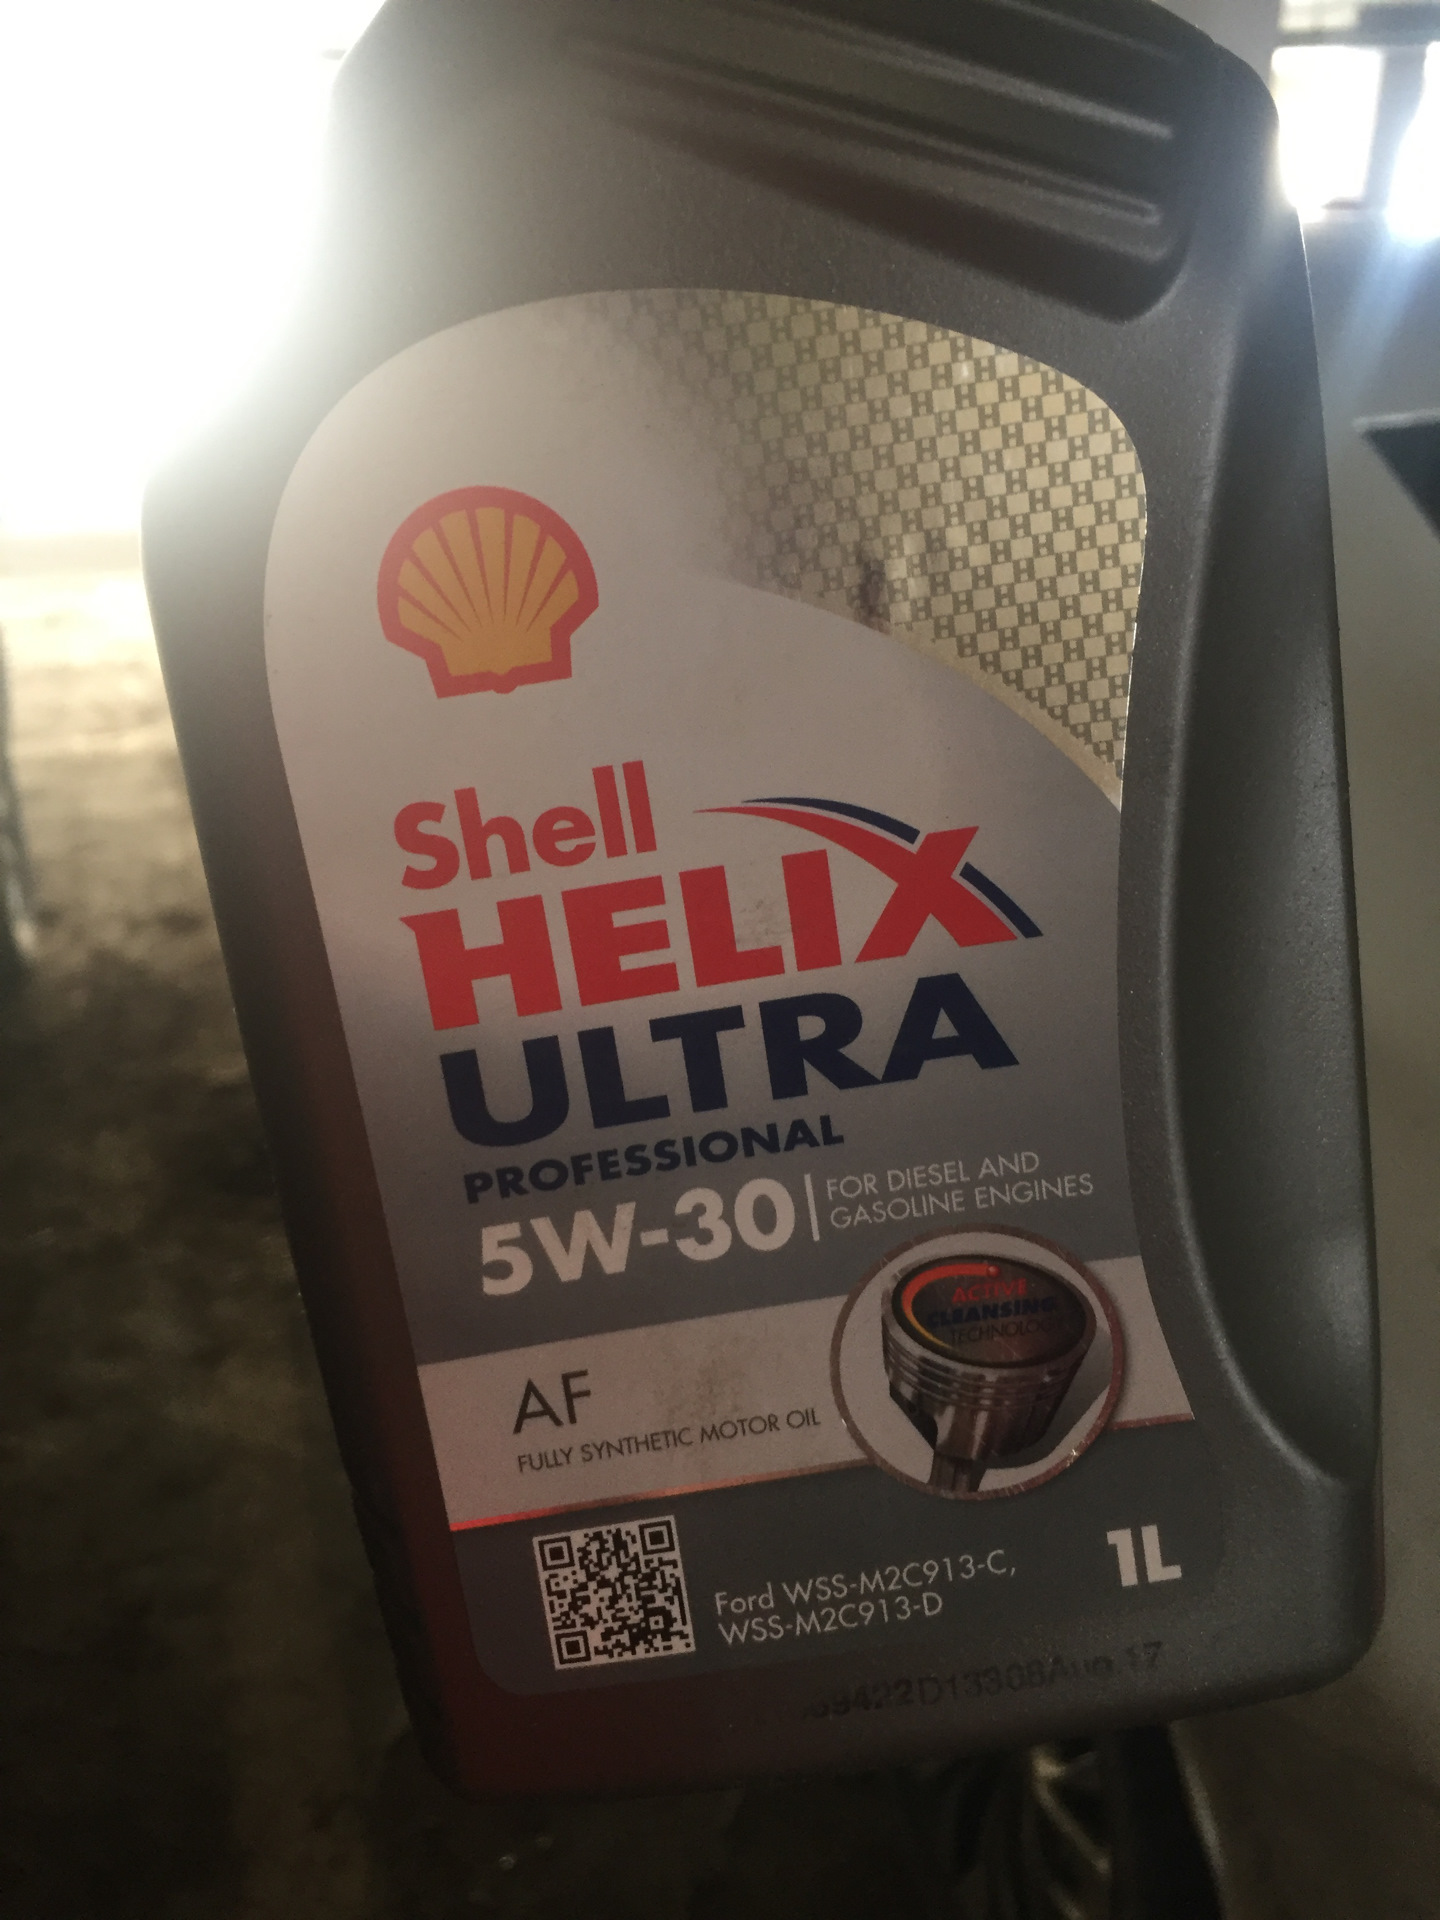 Helix ultra am l. Shell Helix Ultra professional am-l 5w30 бочка.